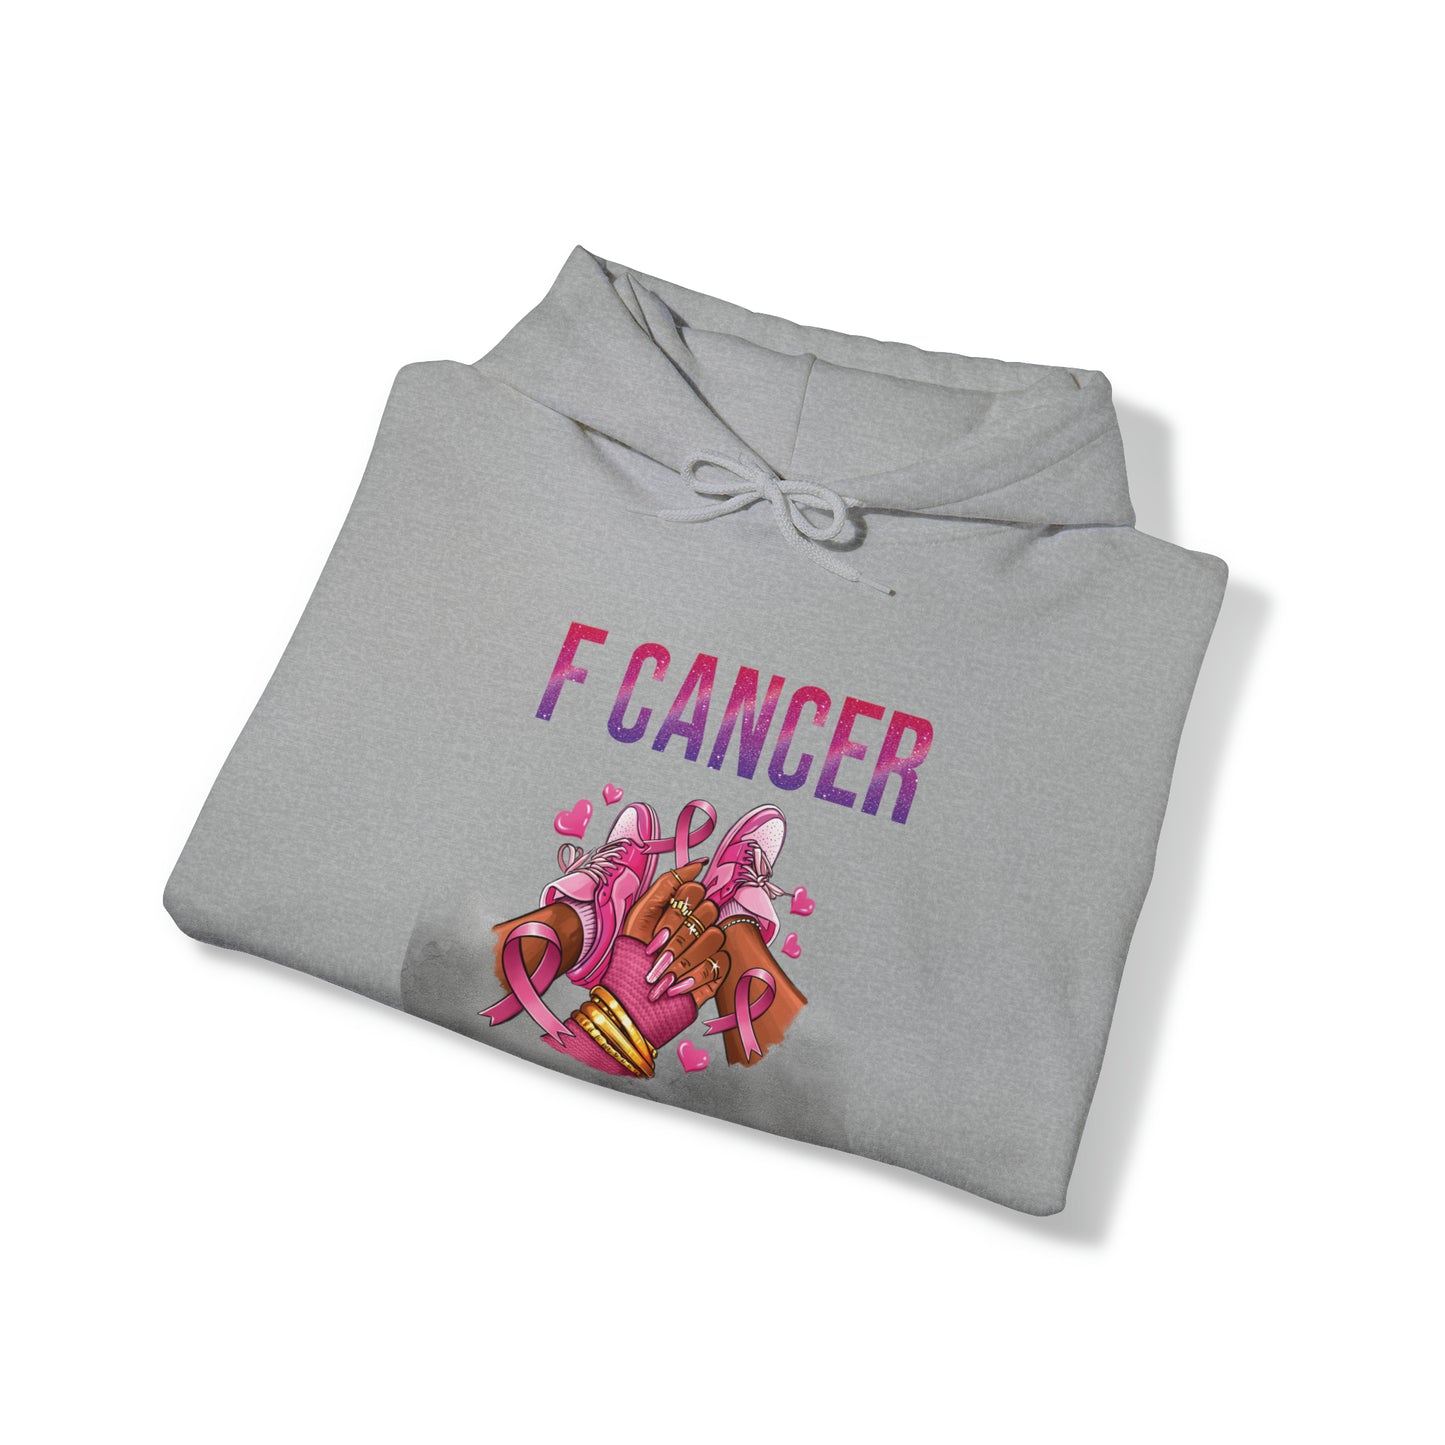 F Cancer Heavy Blend™ Hooded Sweatshirt